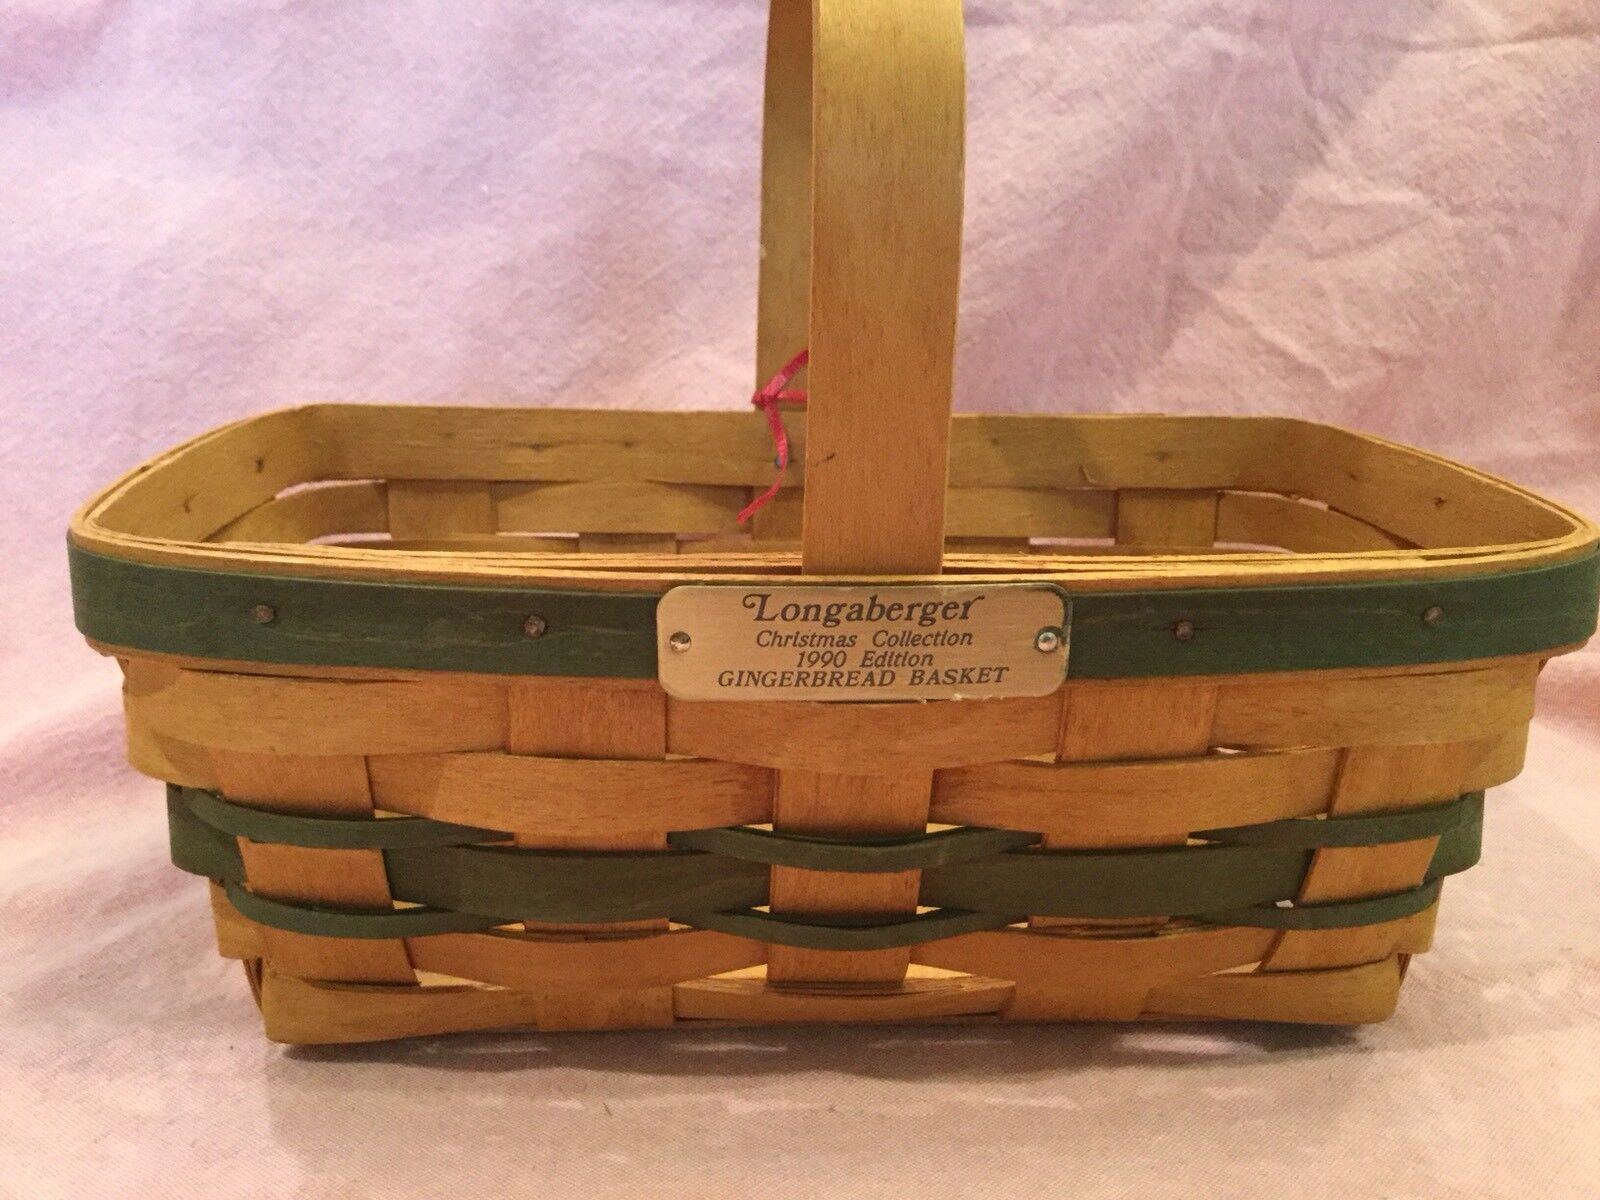 Longaberger 1990 Christmas Gingerbread Basket - Green 3400-AGST